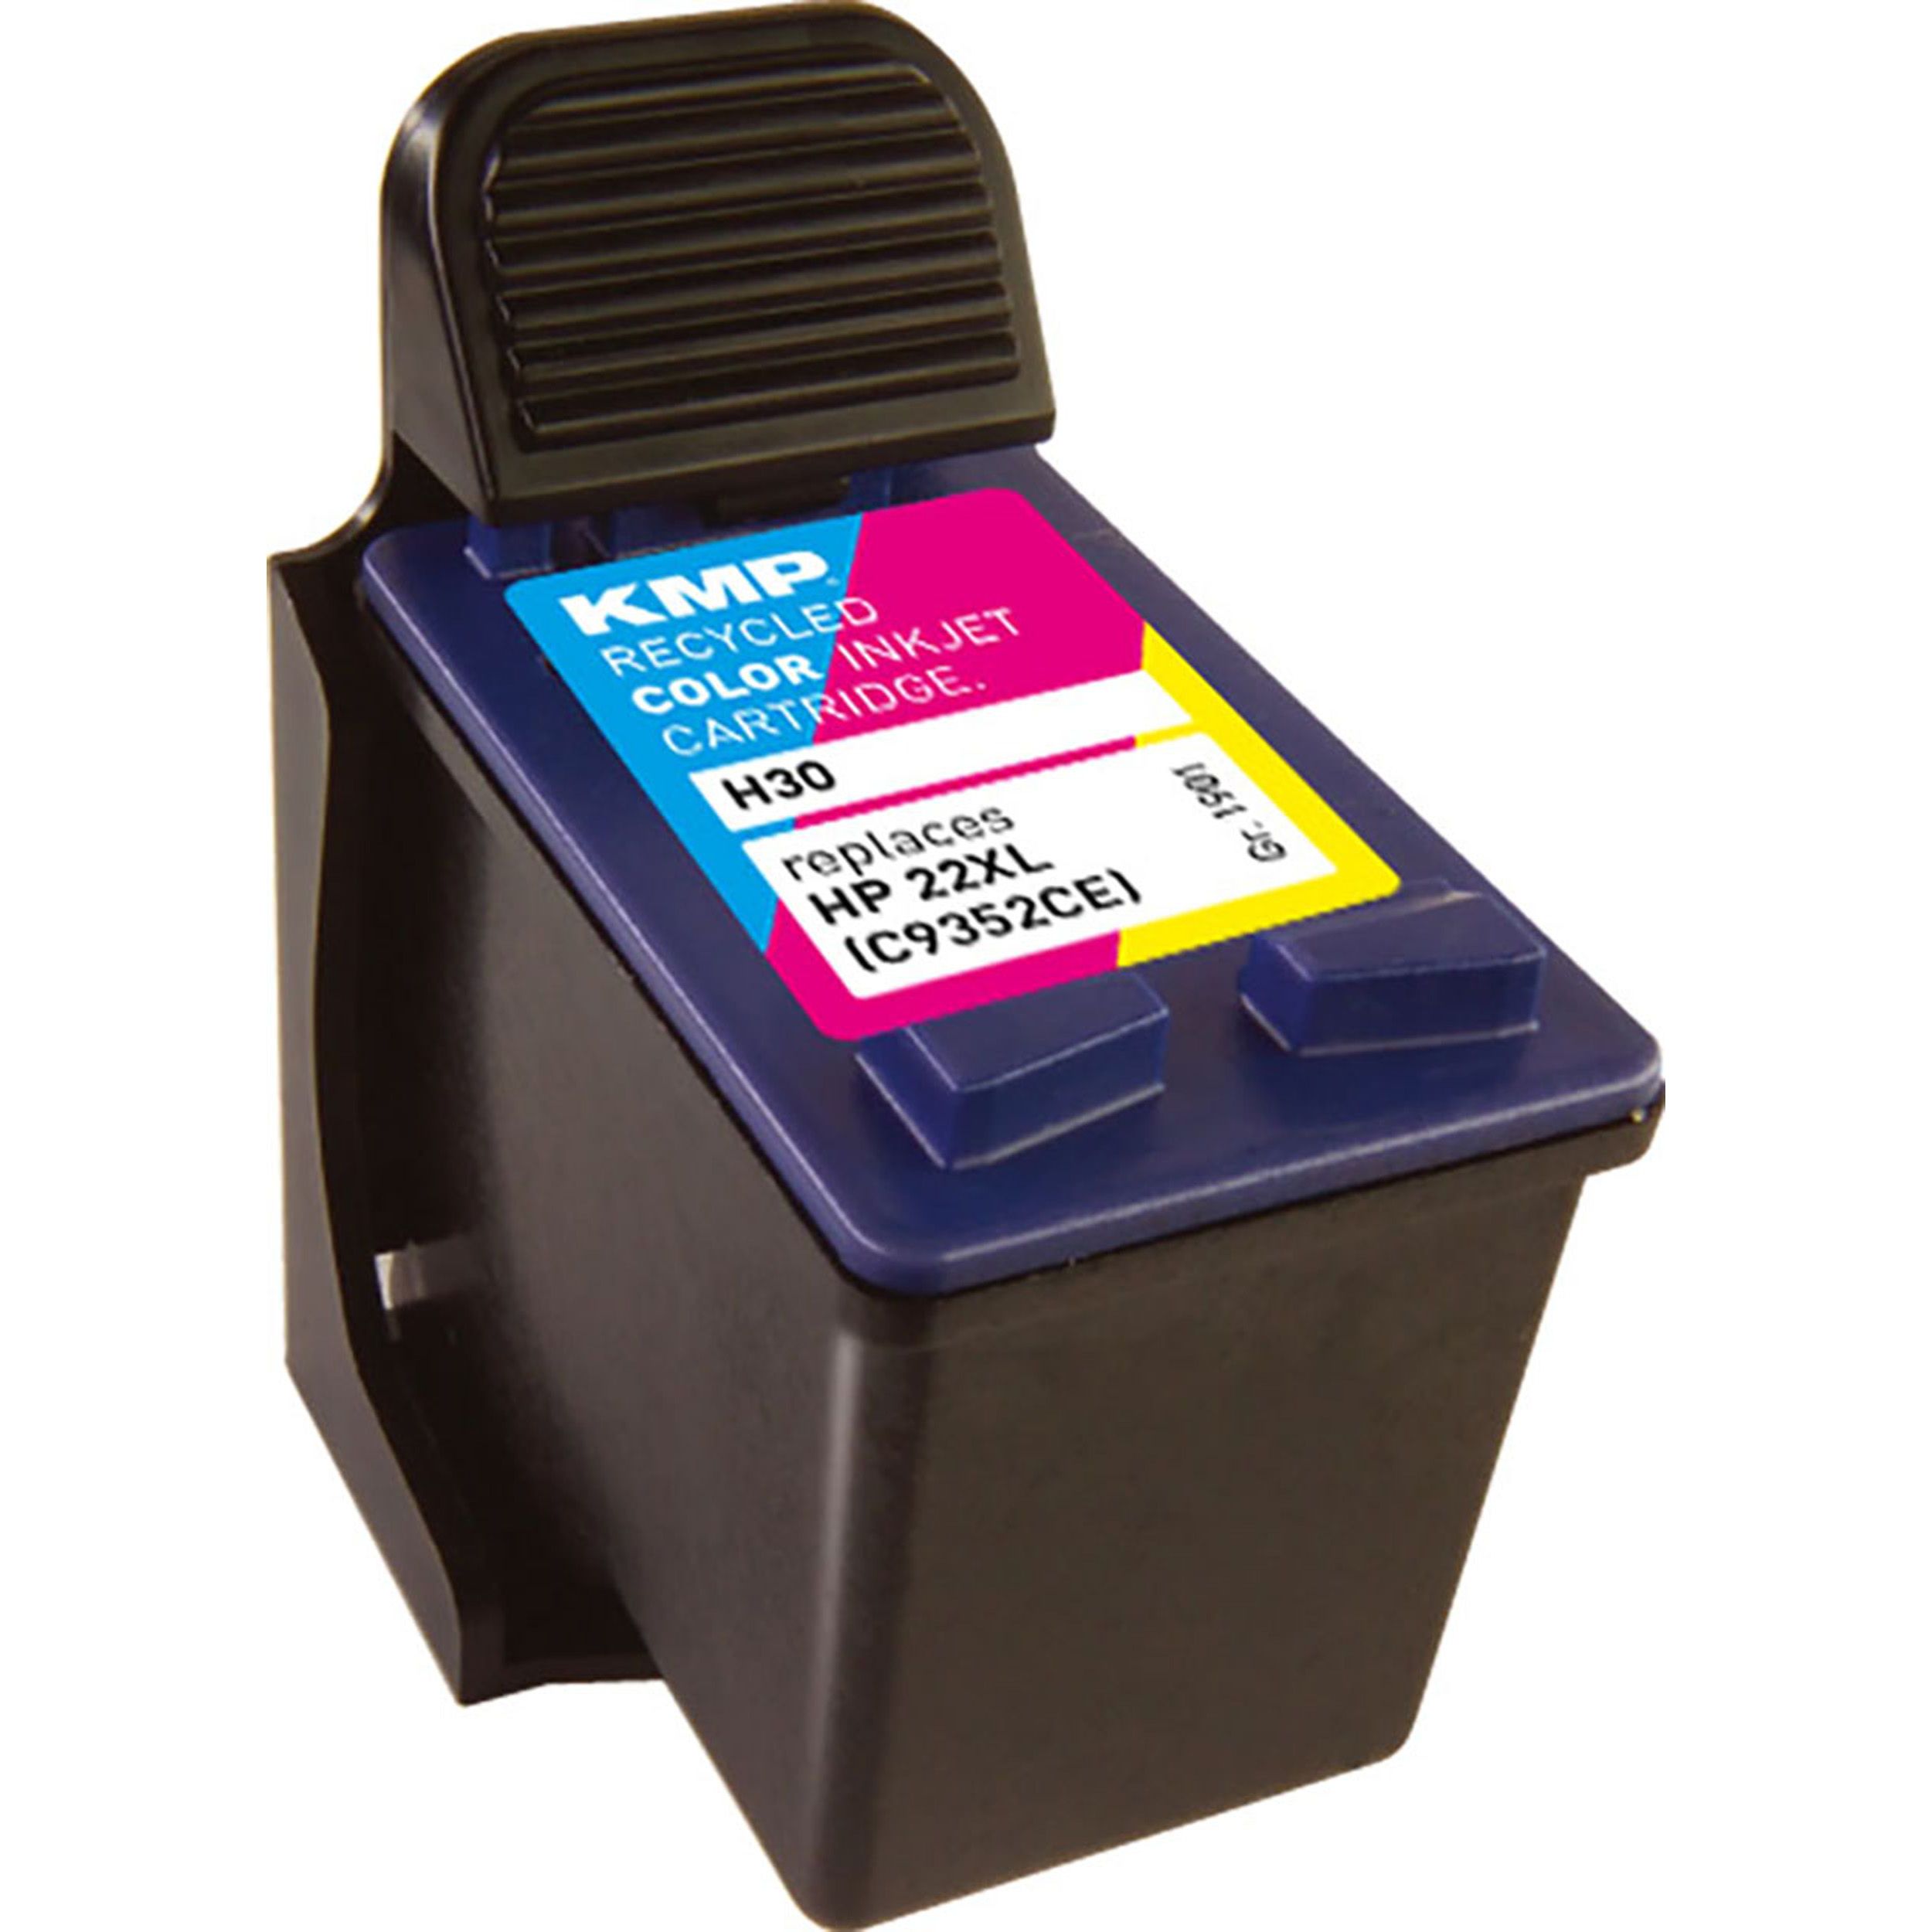 HP 3-farbig (C9352CE) Tintenpatrone KMP 22XL (C9352CE) für Cartridge C,M,Y Ink mehrfarbig